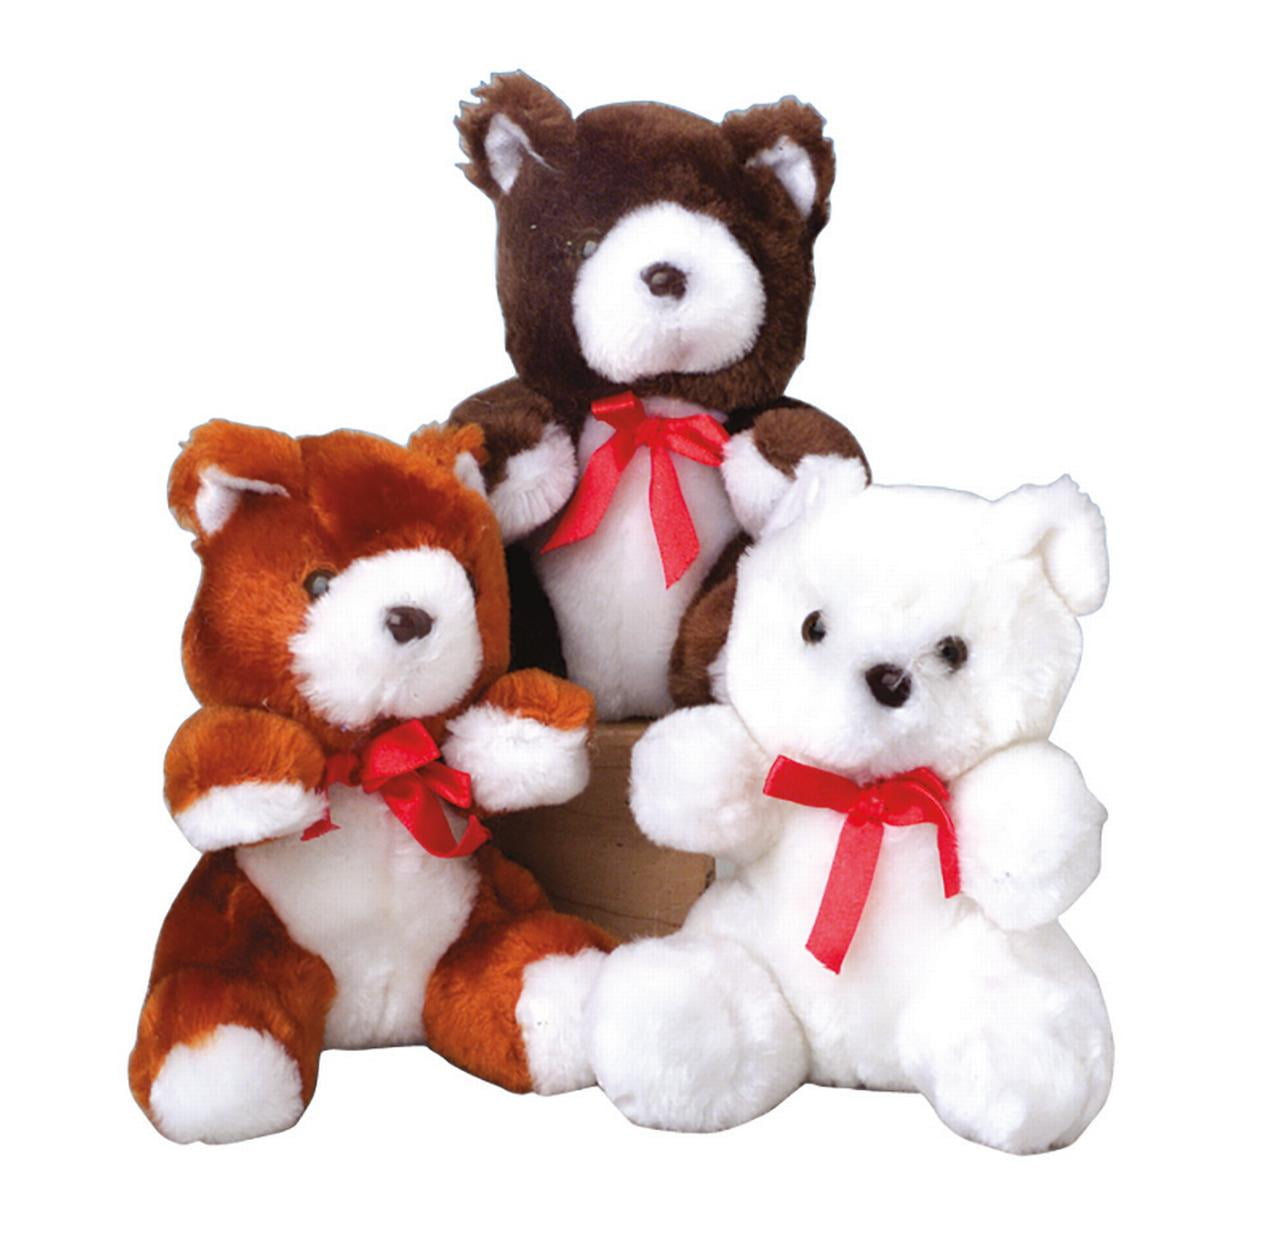 6" Brown Plush Teddy Bear Stuffed Animal Toy Gift New 